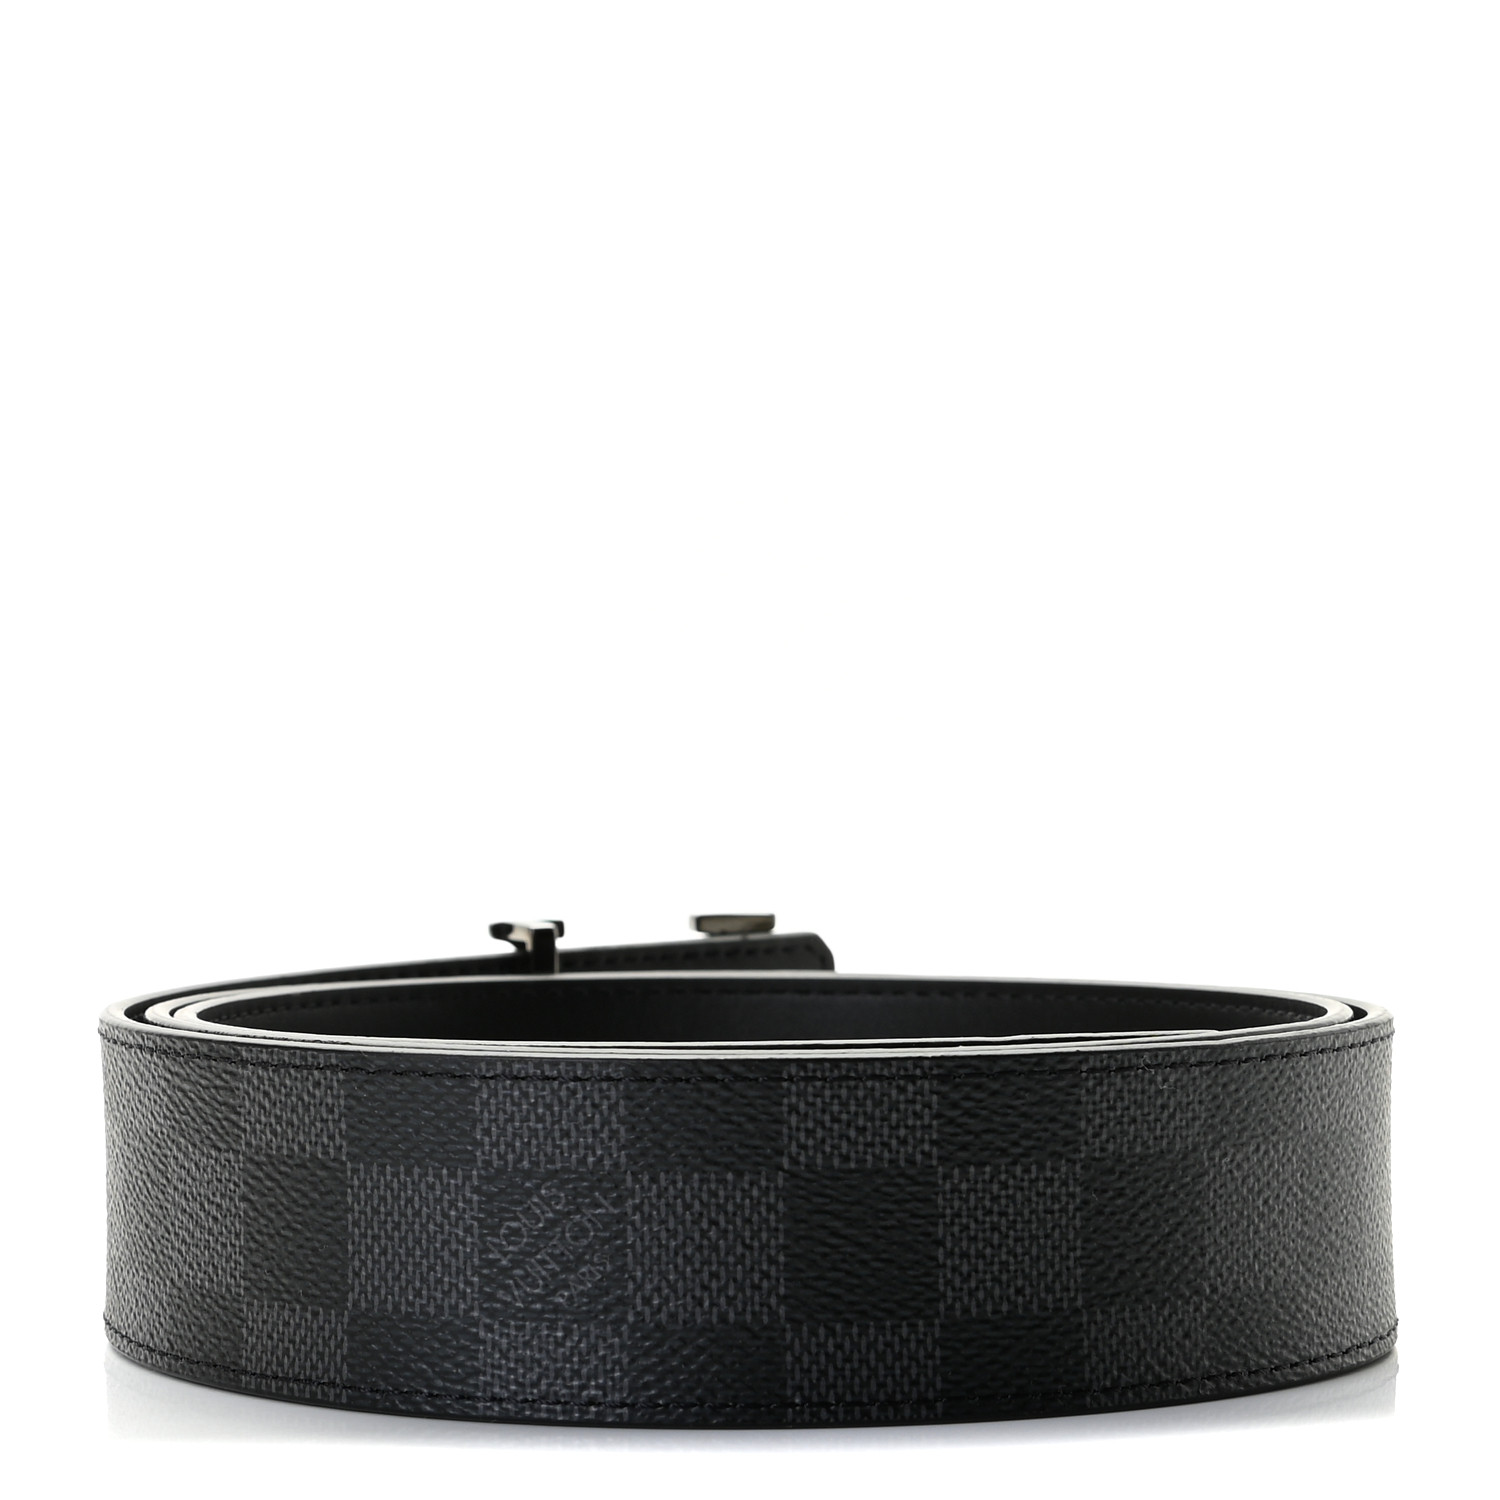 Louis Vuitton LV Initiales Silver Buckle Reversible Belt Damier Graphite  40mm Black Lining